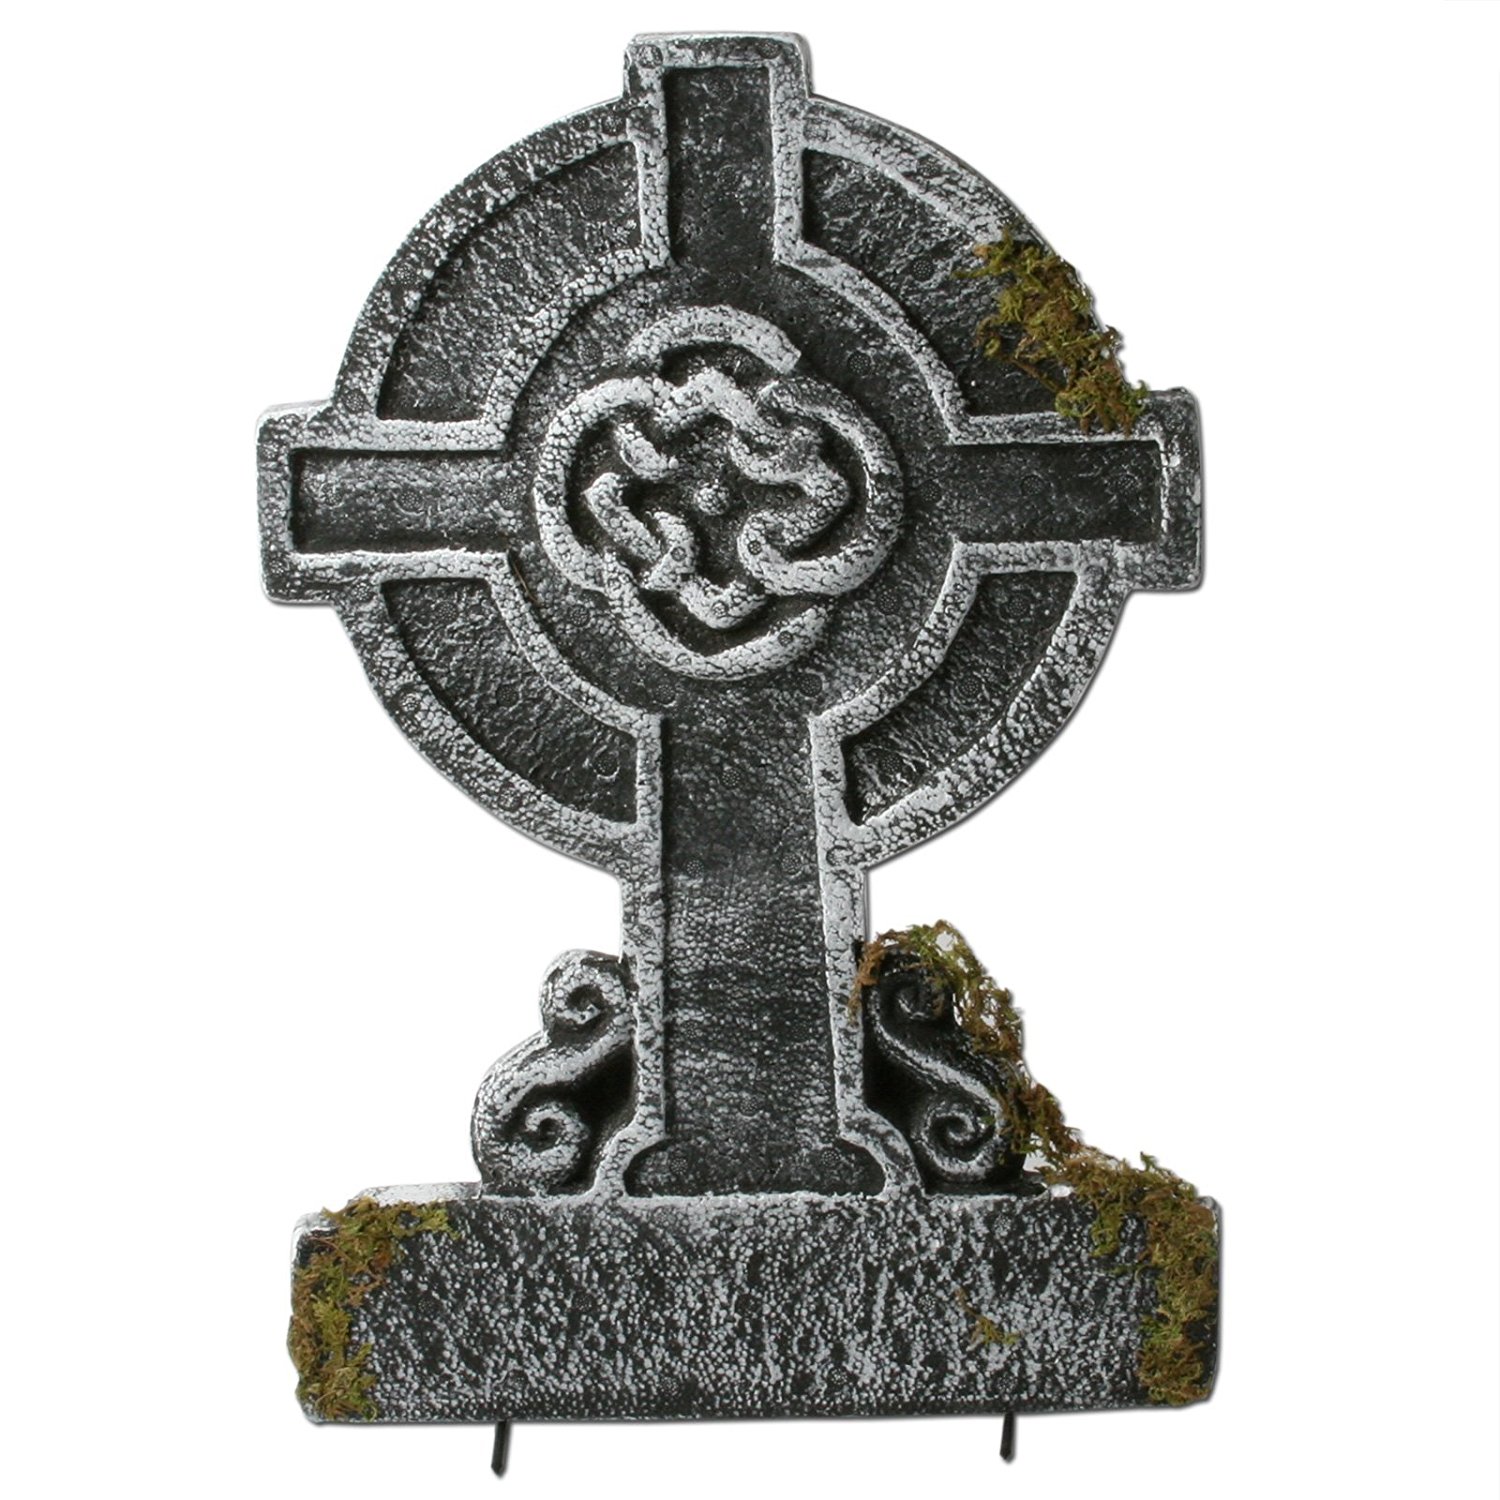 Amazon.com: Creepy Cemetery Halloween Party Mossy Celtic Cross ...